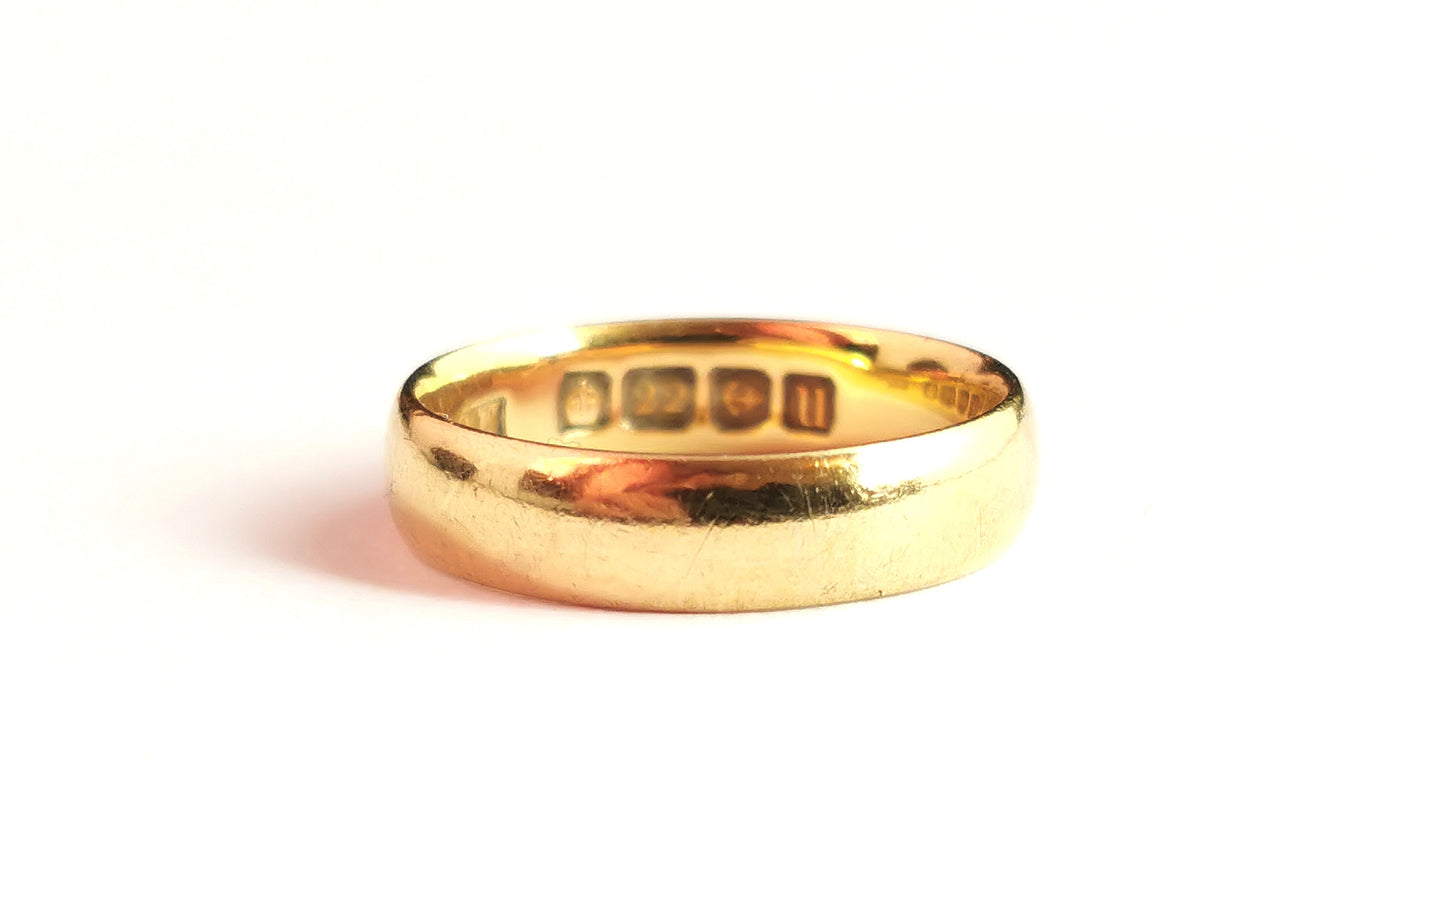 Antique 22ct yellow gold band ring, wedding ring